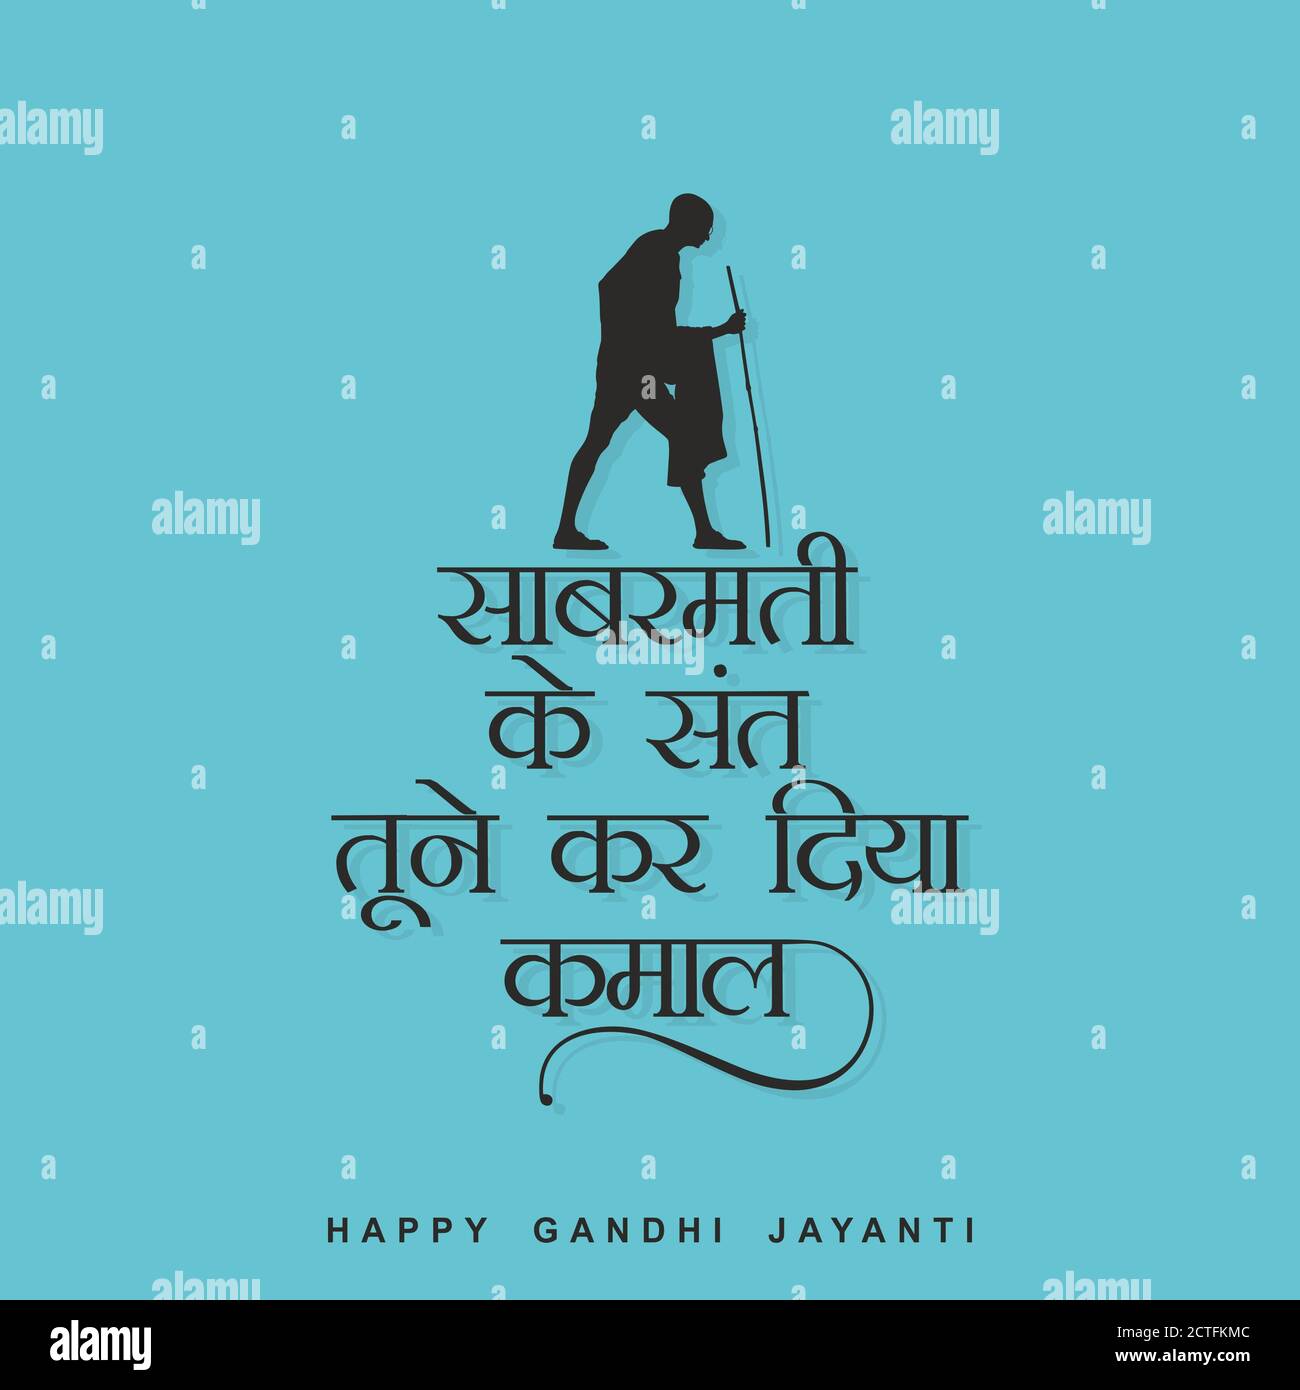 Hindi Typography - Sabarmati Ke Sant Toone Kar Diya Kamal - Means Saint of Sabarmati, You Did Great Job - Happy Gandhi Jayanti Banner Stock Photo